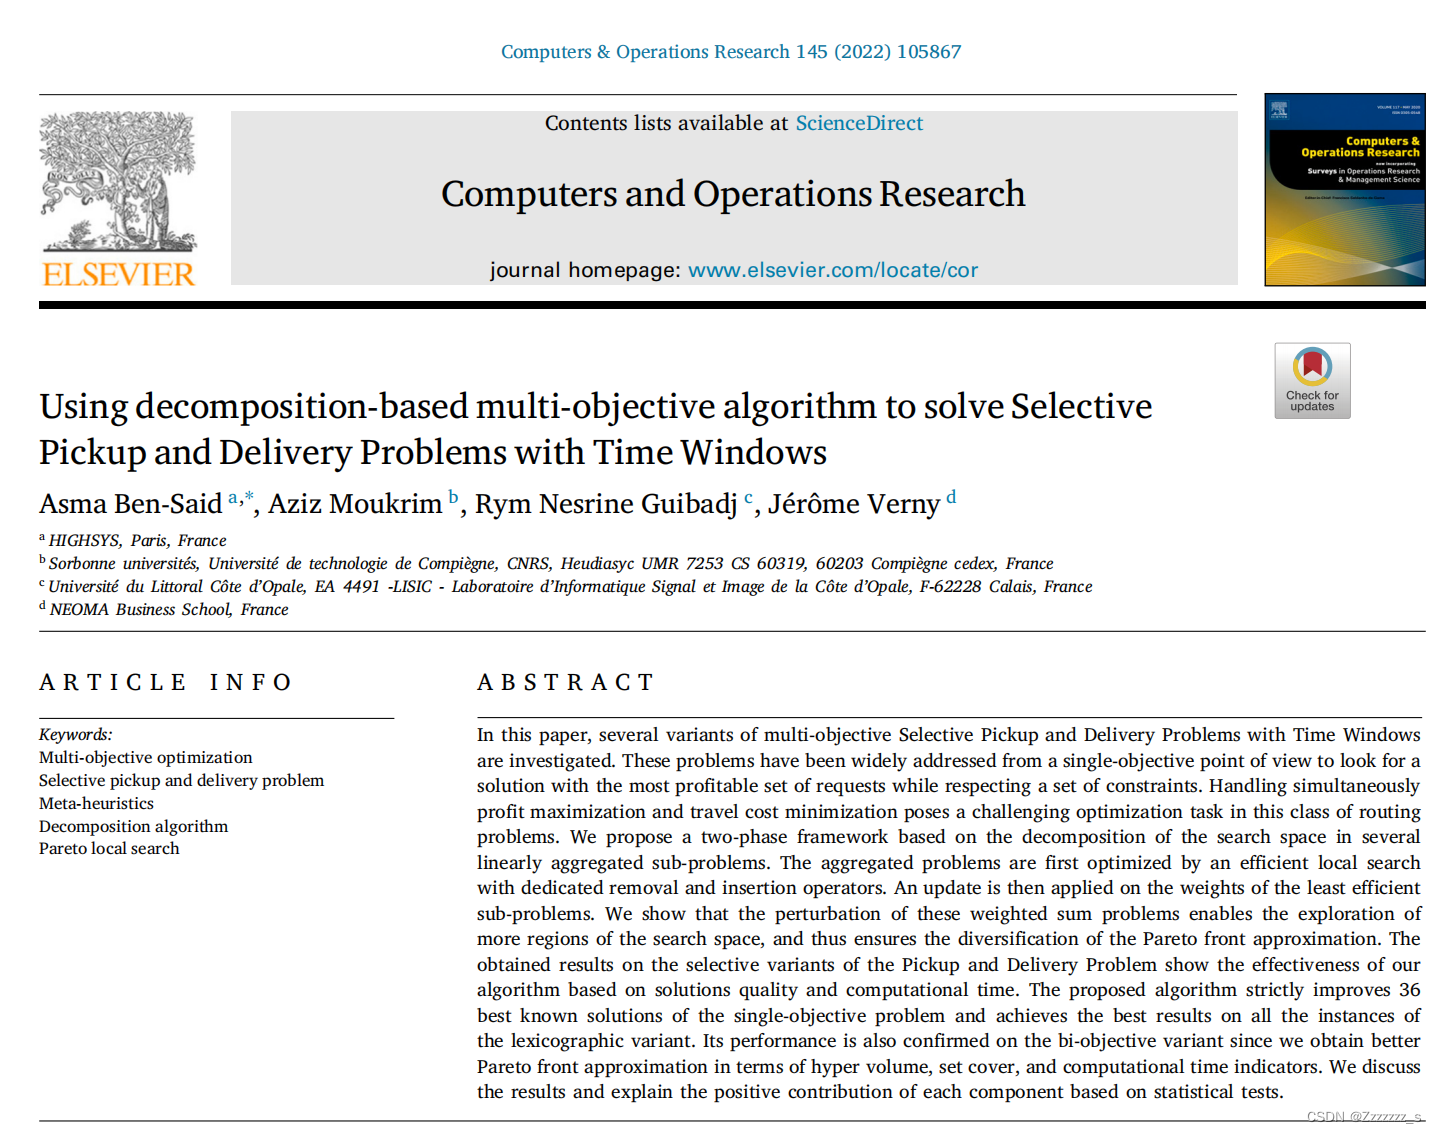 decomposition-based multi-objective algorithm4SPDPTW